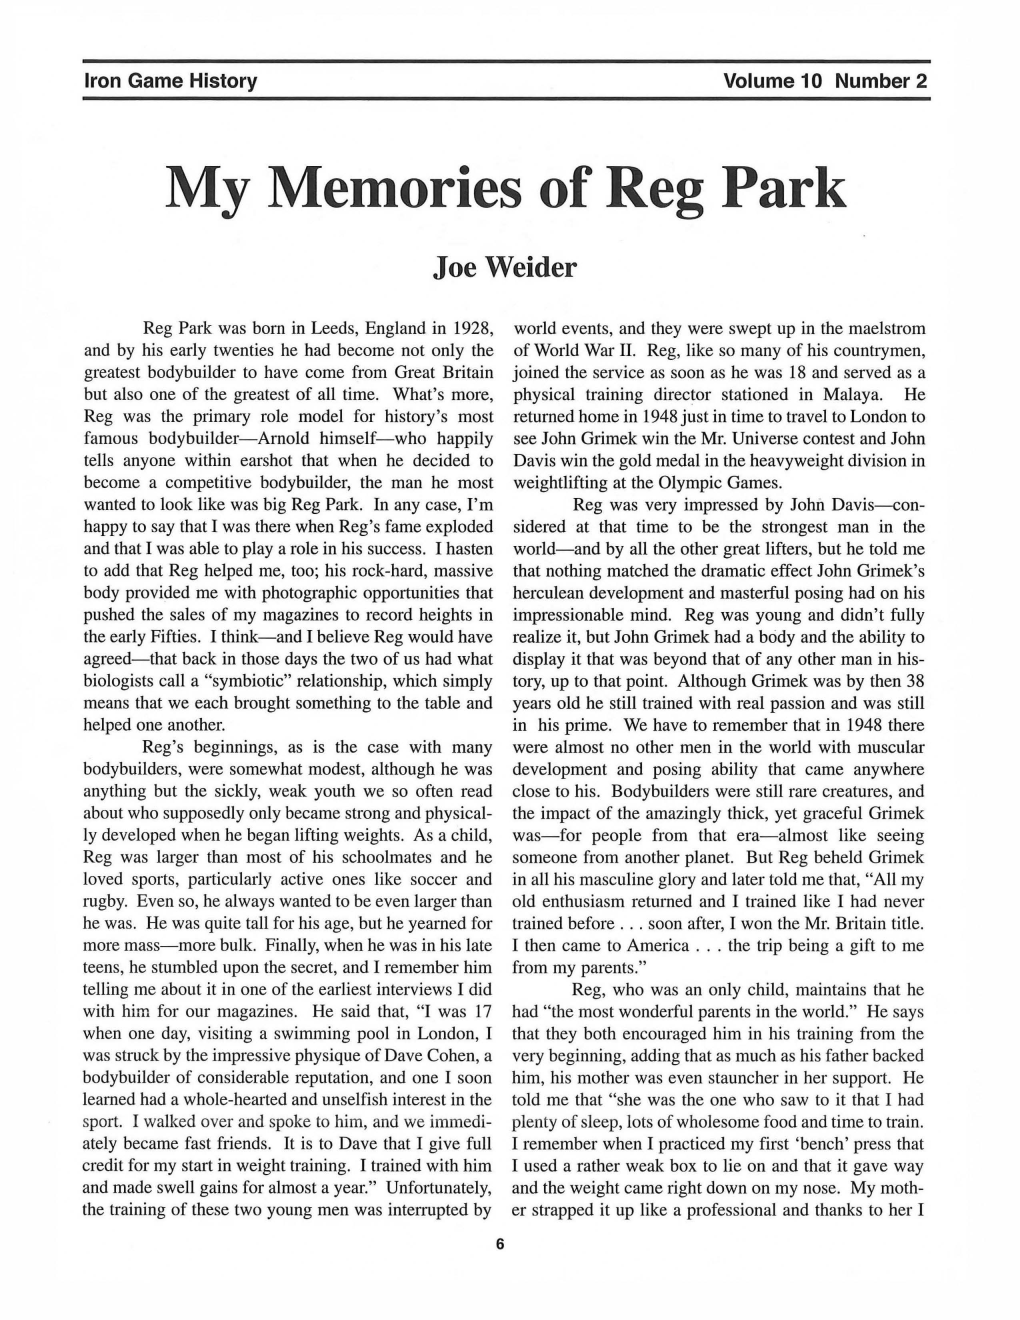 My Memories of Reg Park